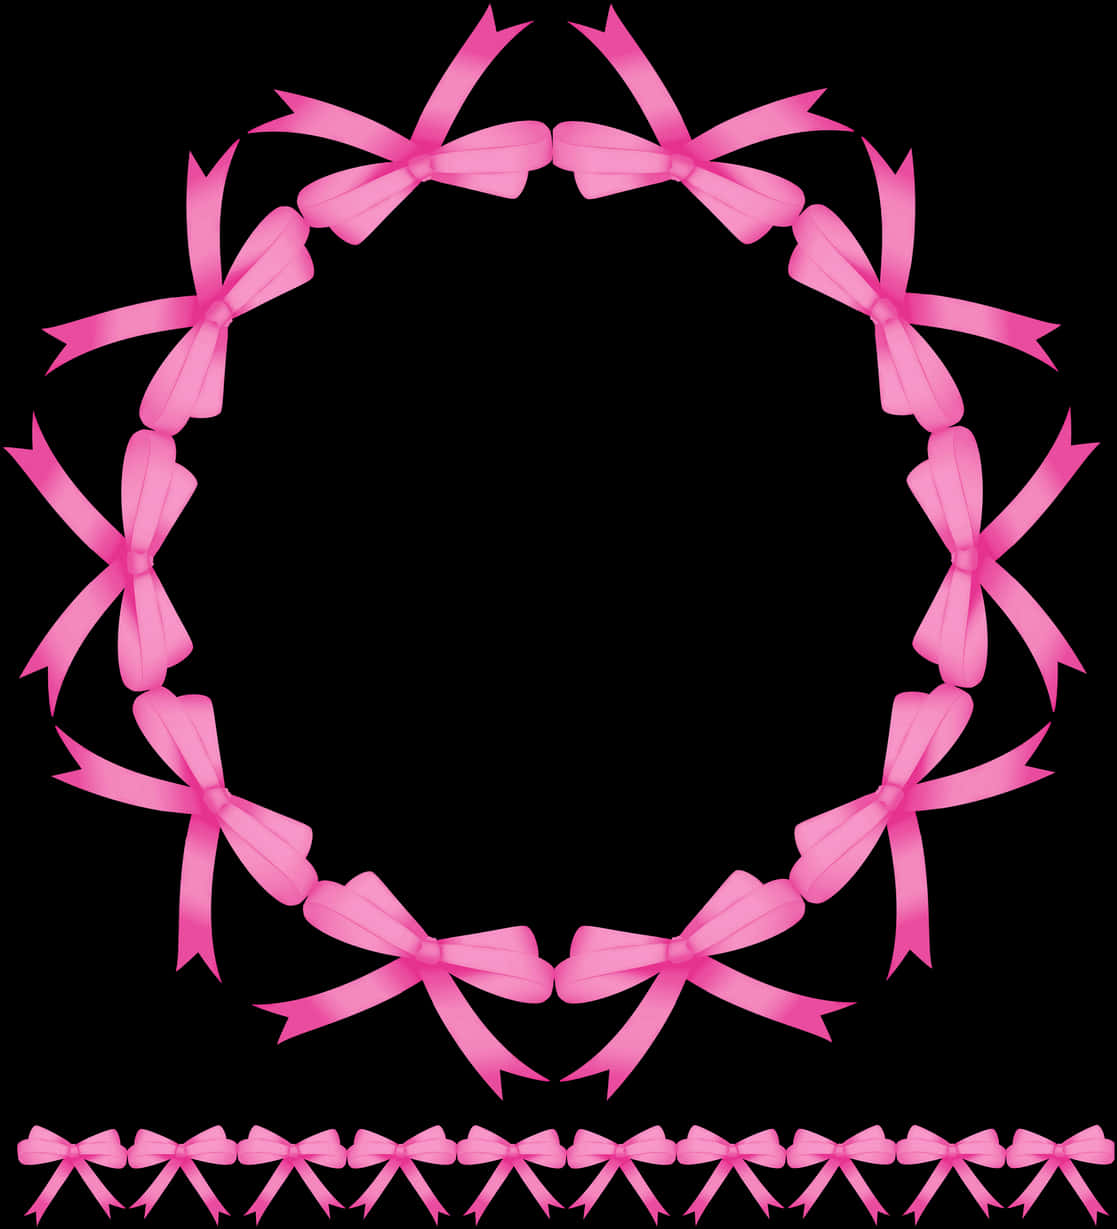 A Pink Ribbon In A Circle